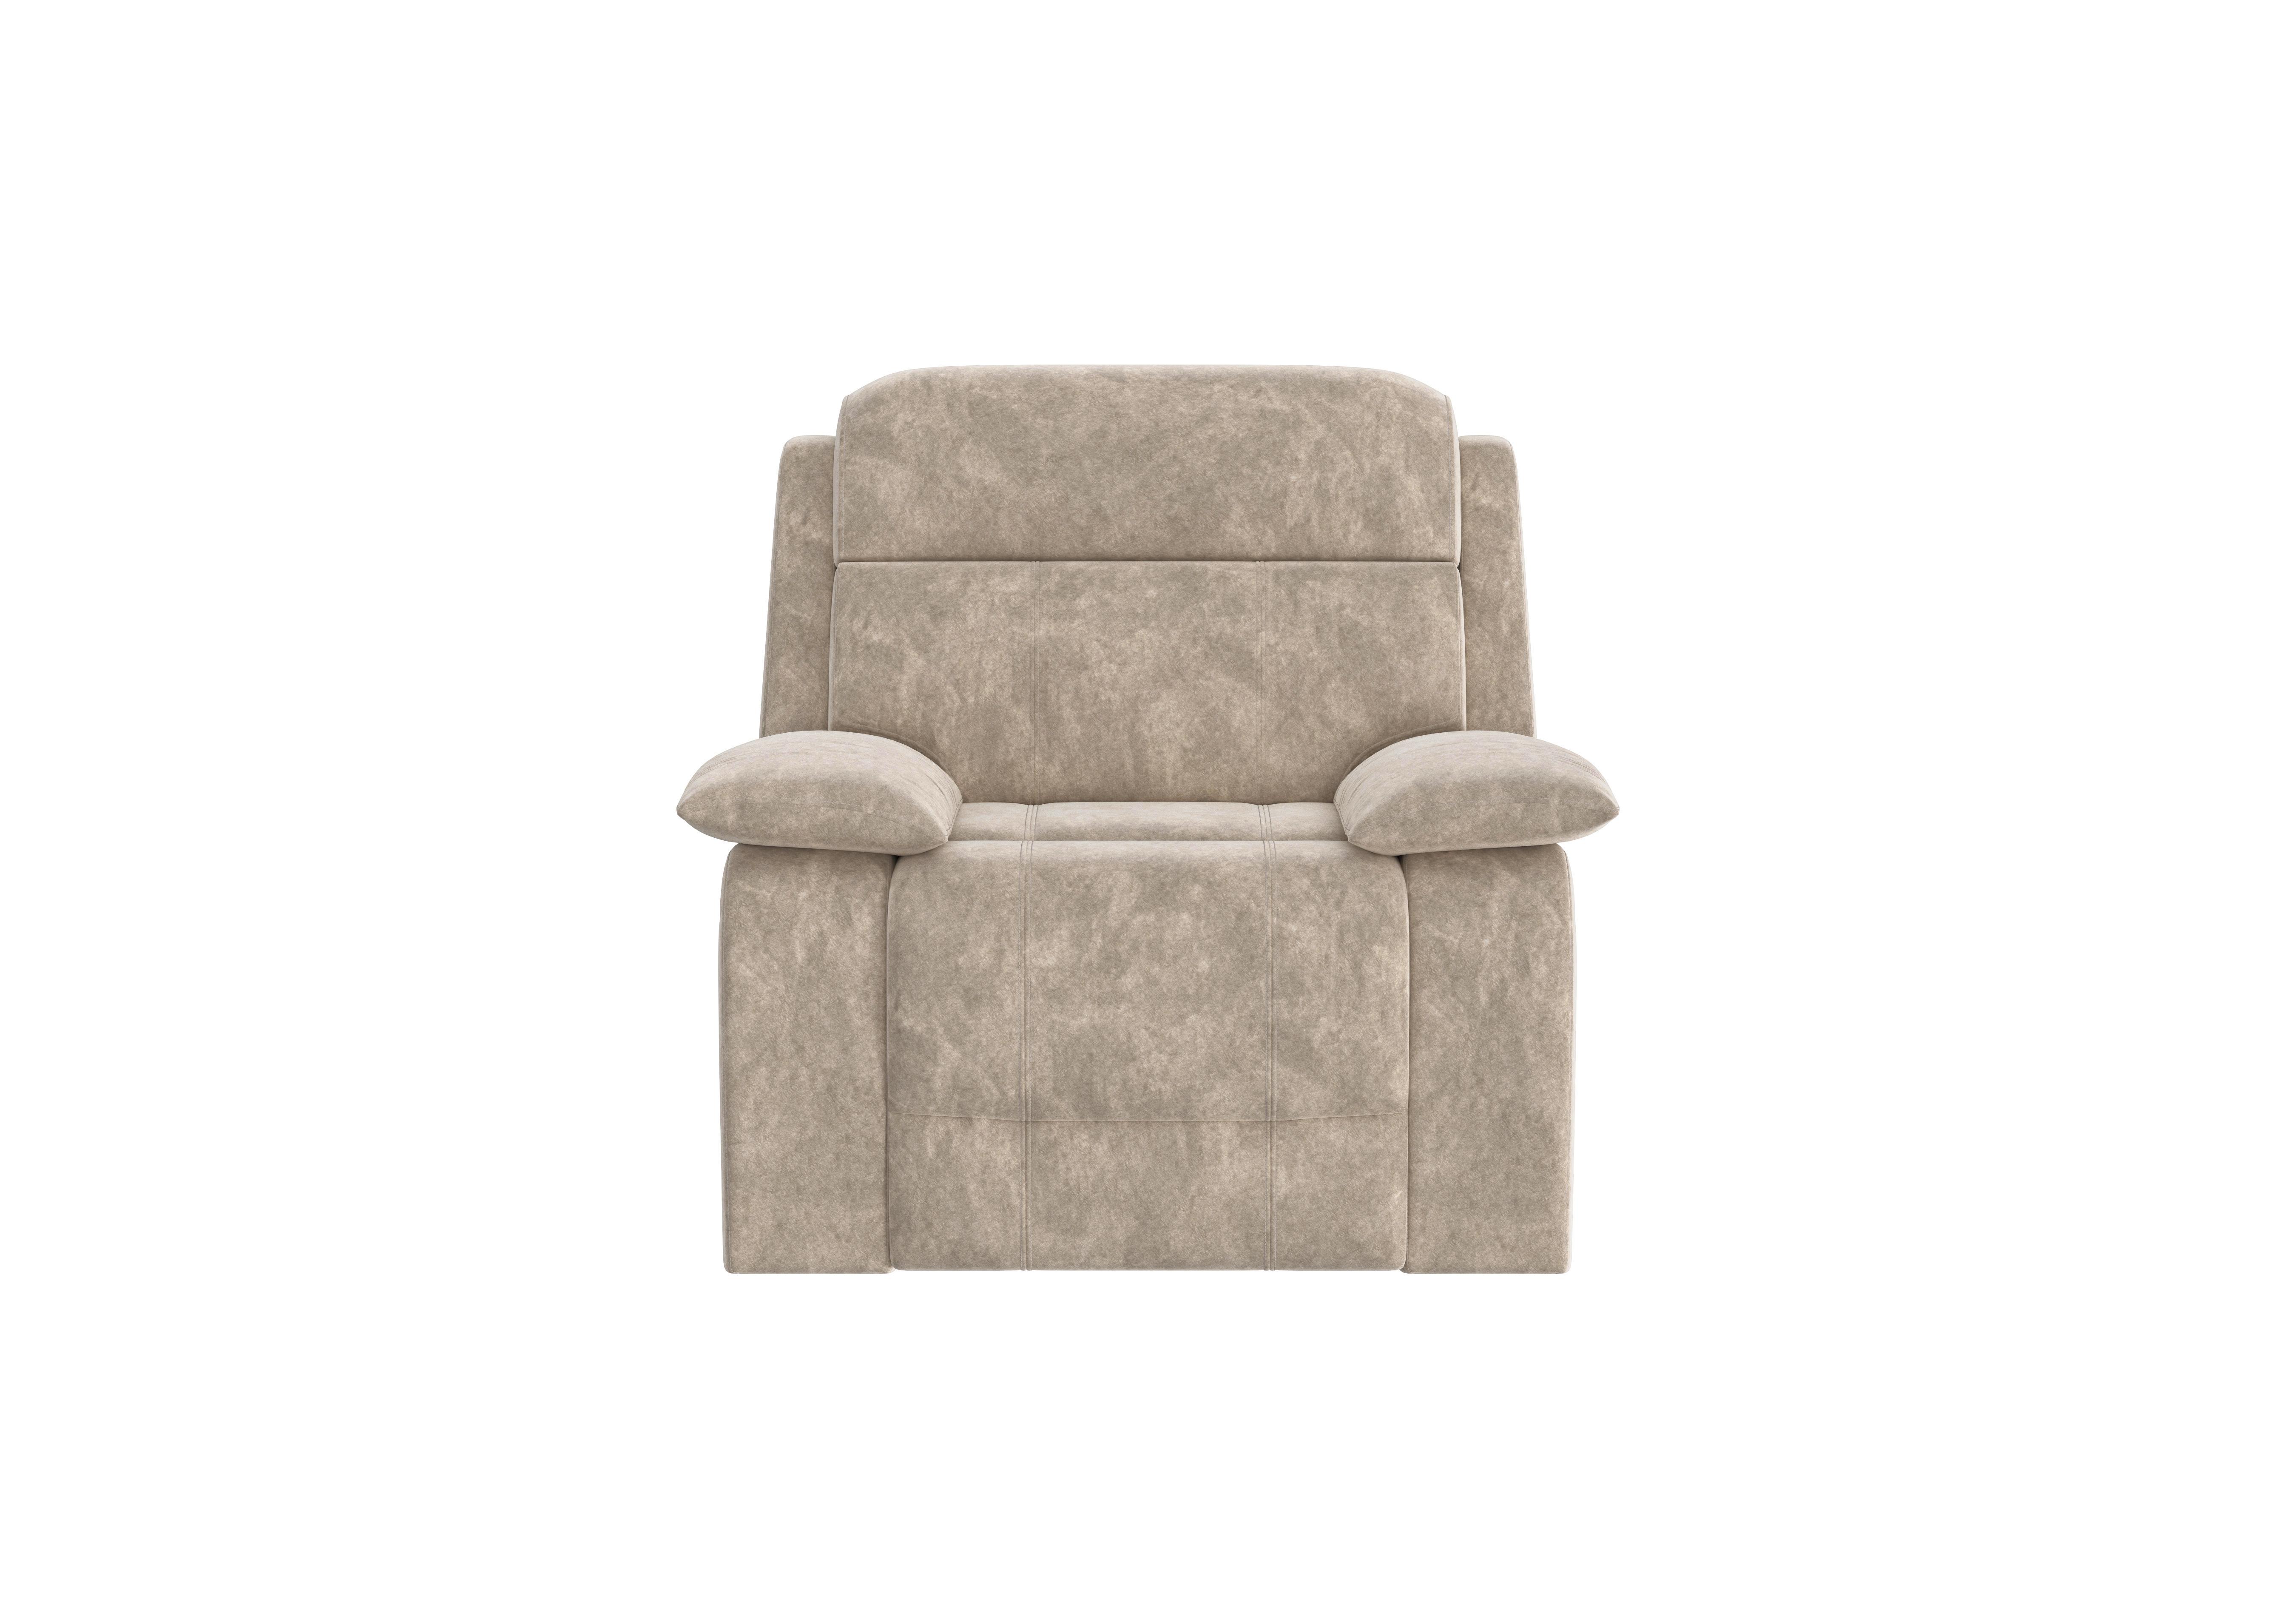 Moreno Fabric Power Recliner Armchair with Power Headrest in Bfa-Bnn-R26 Cream on Furniture Village